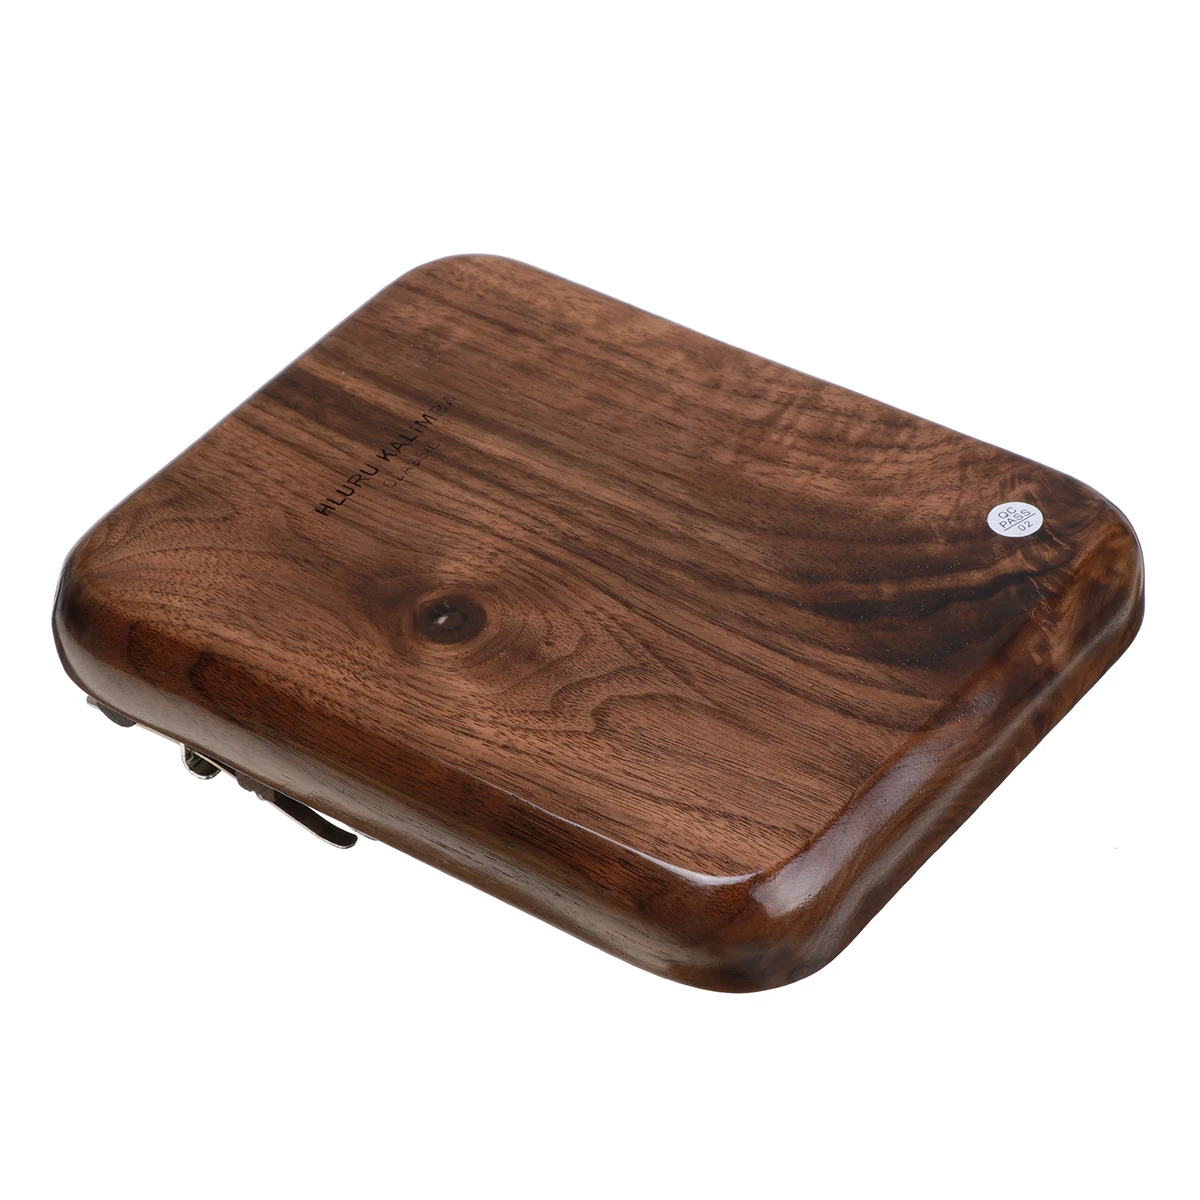 Hluru 21 Key Kalimba Keyboard Piano Finger Thumb Mbira Mahogany Solid Wood Full Wood Board With Pickup/Case Accessories enlarge